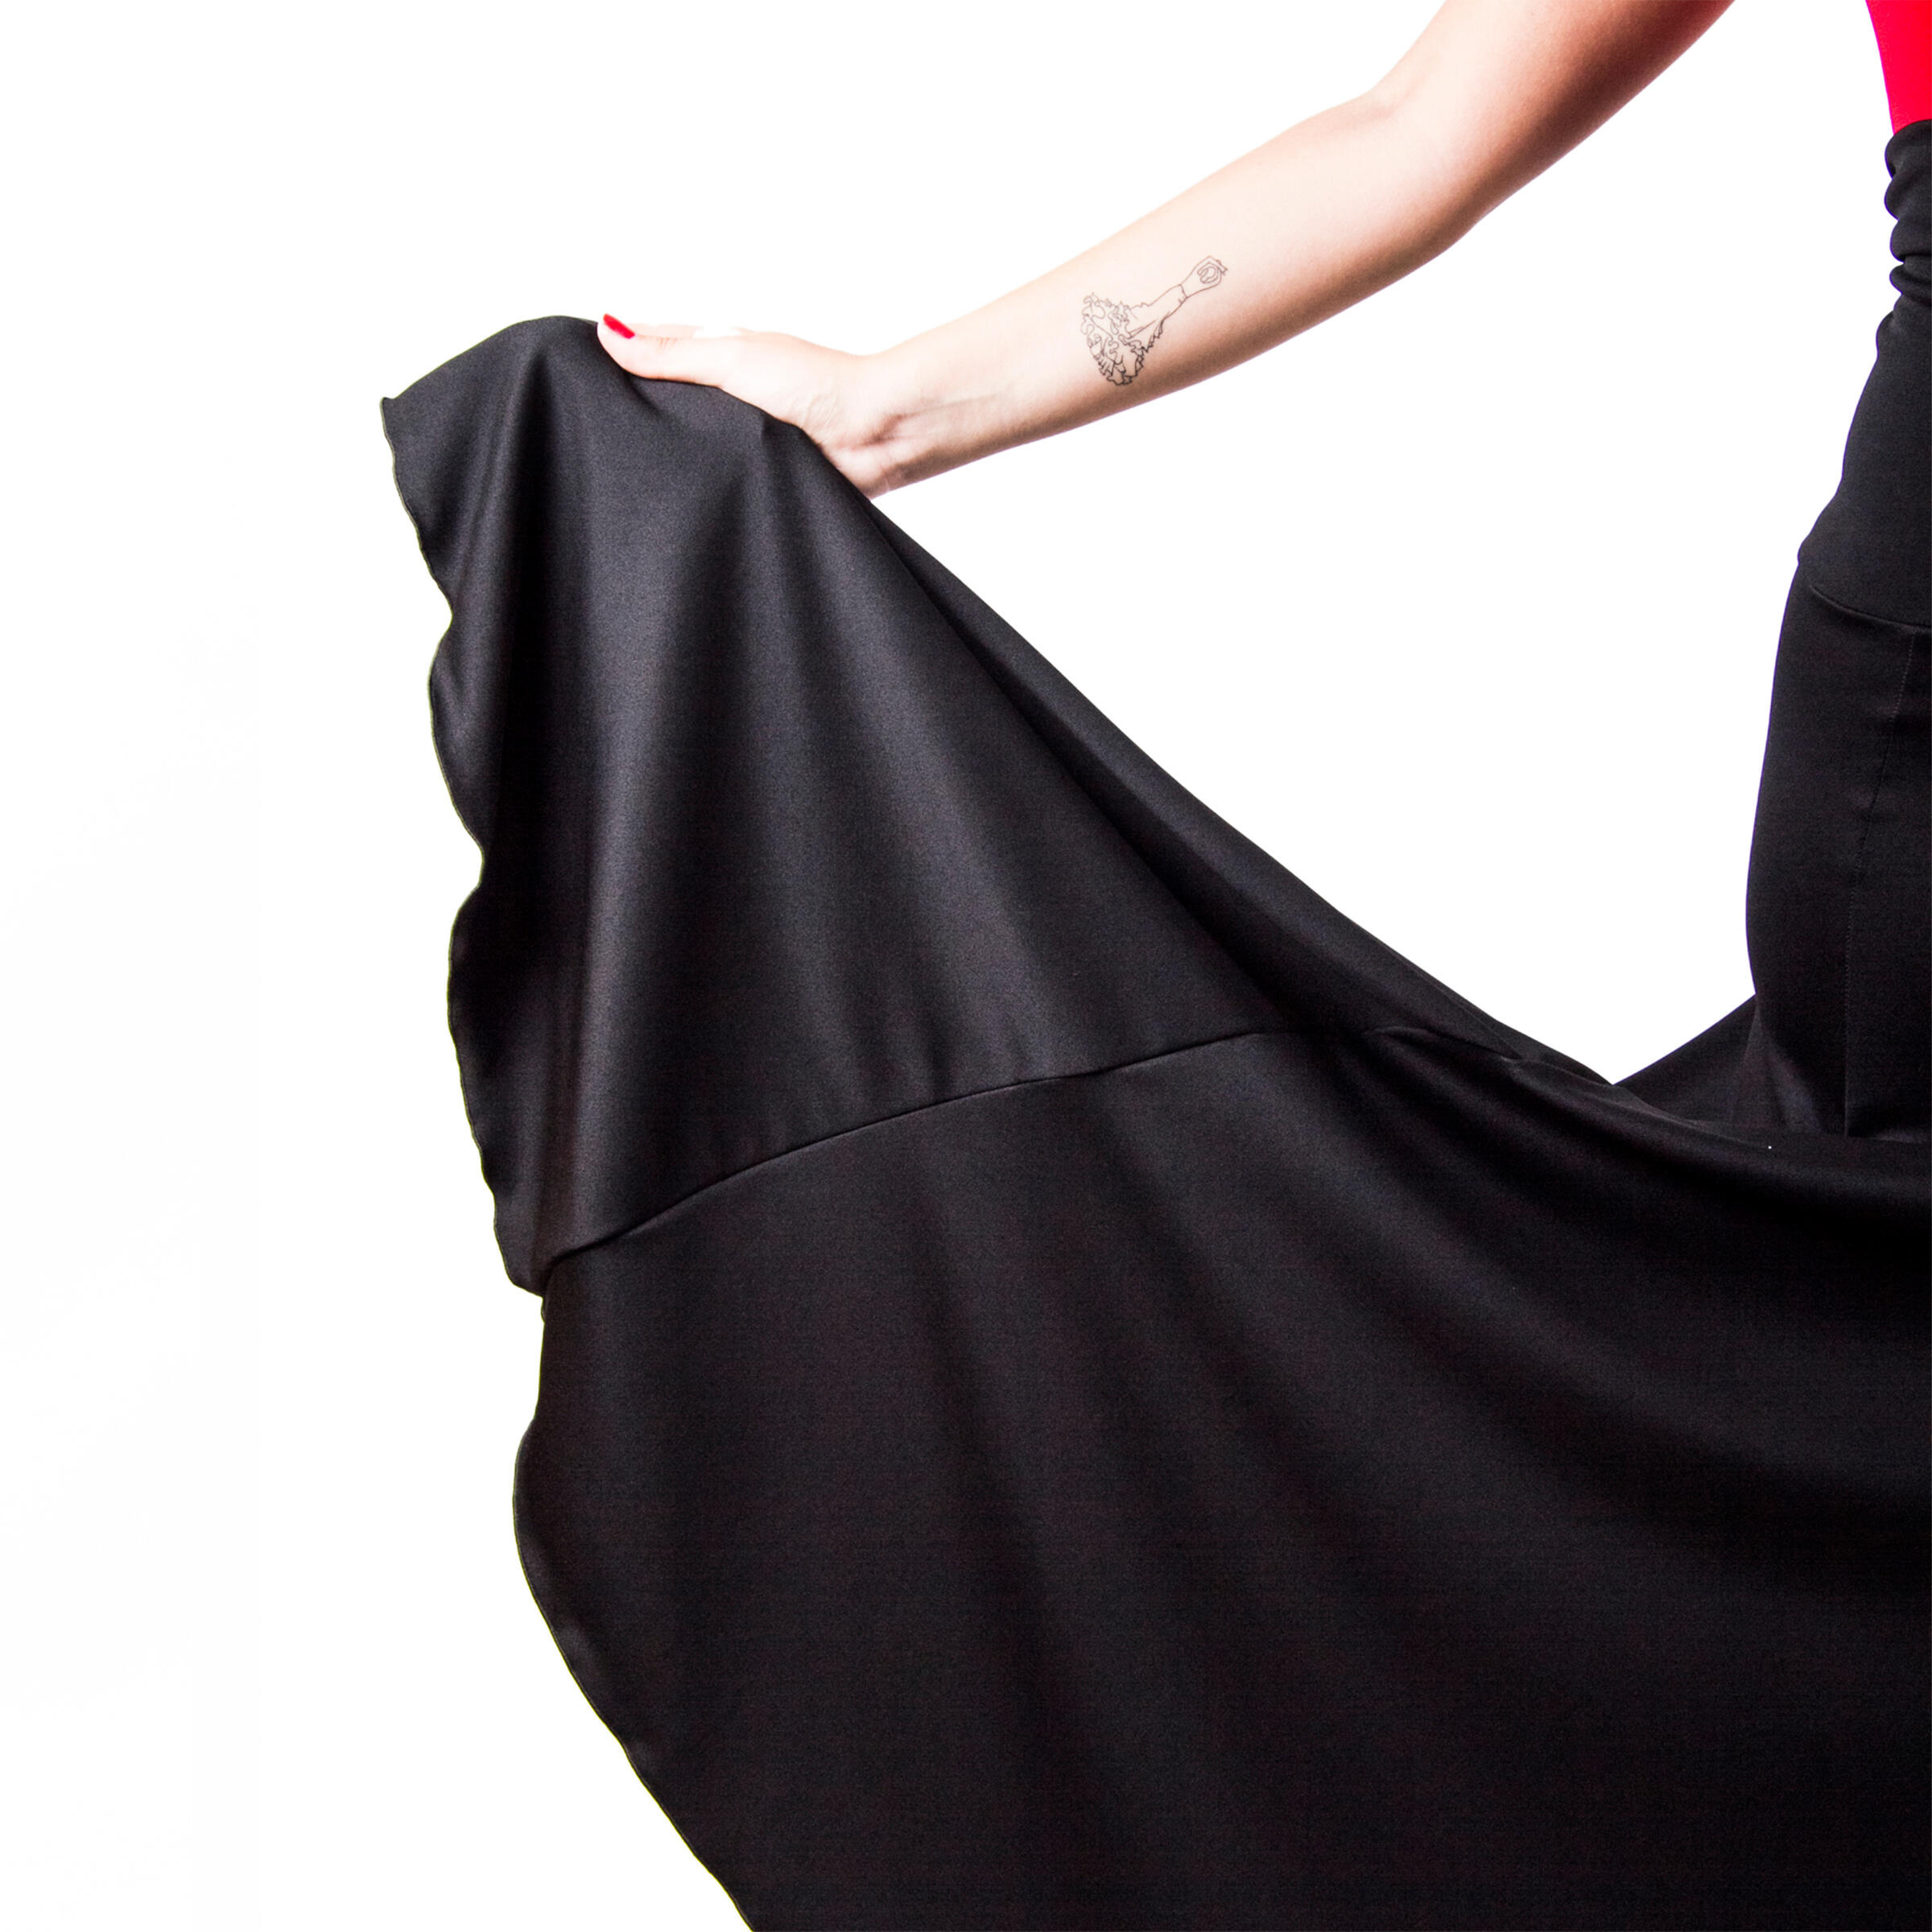 Comprar online Falda de Flamenca Negra